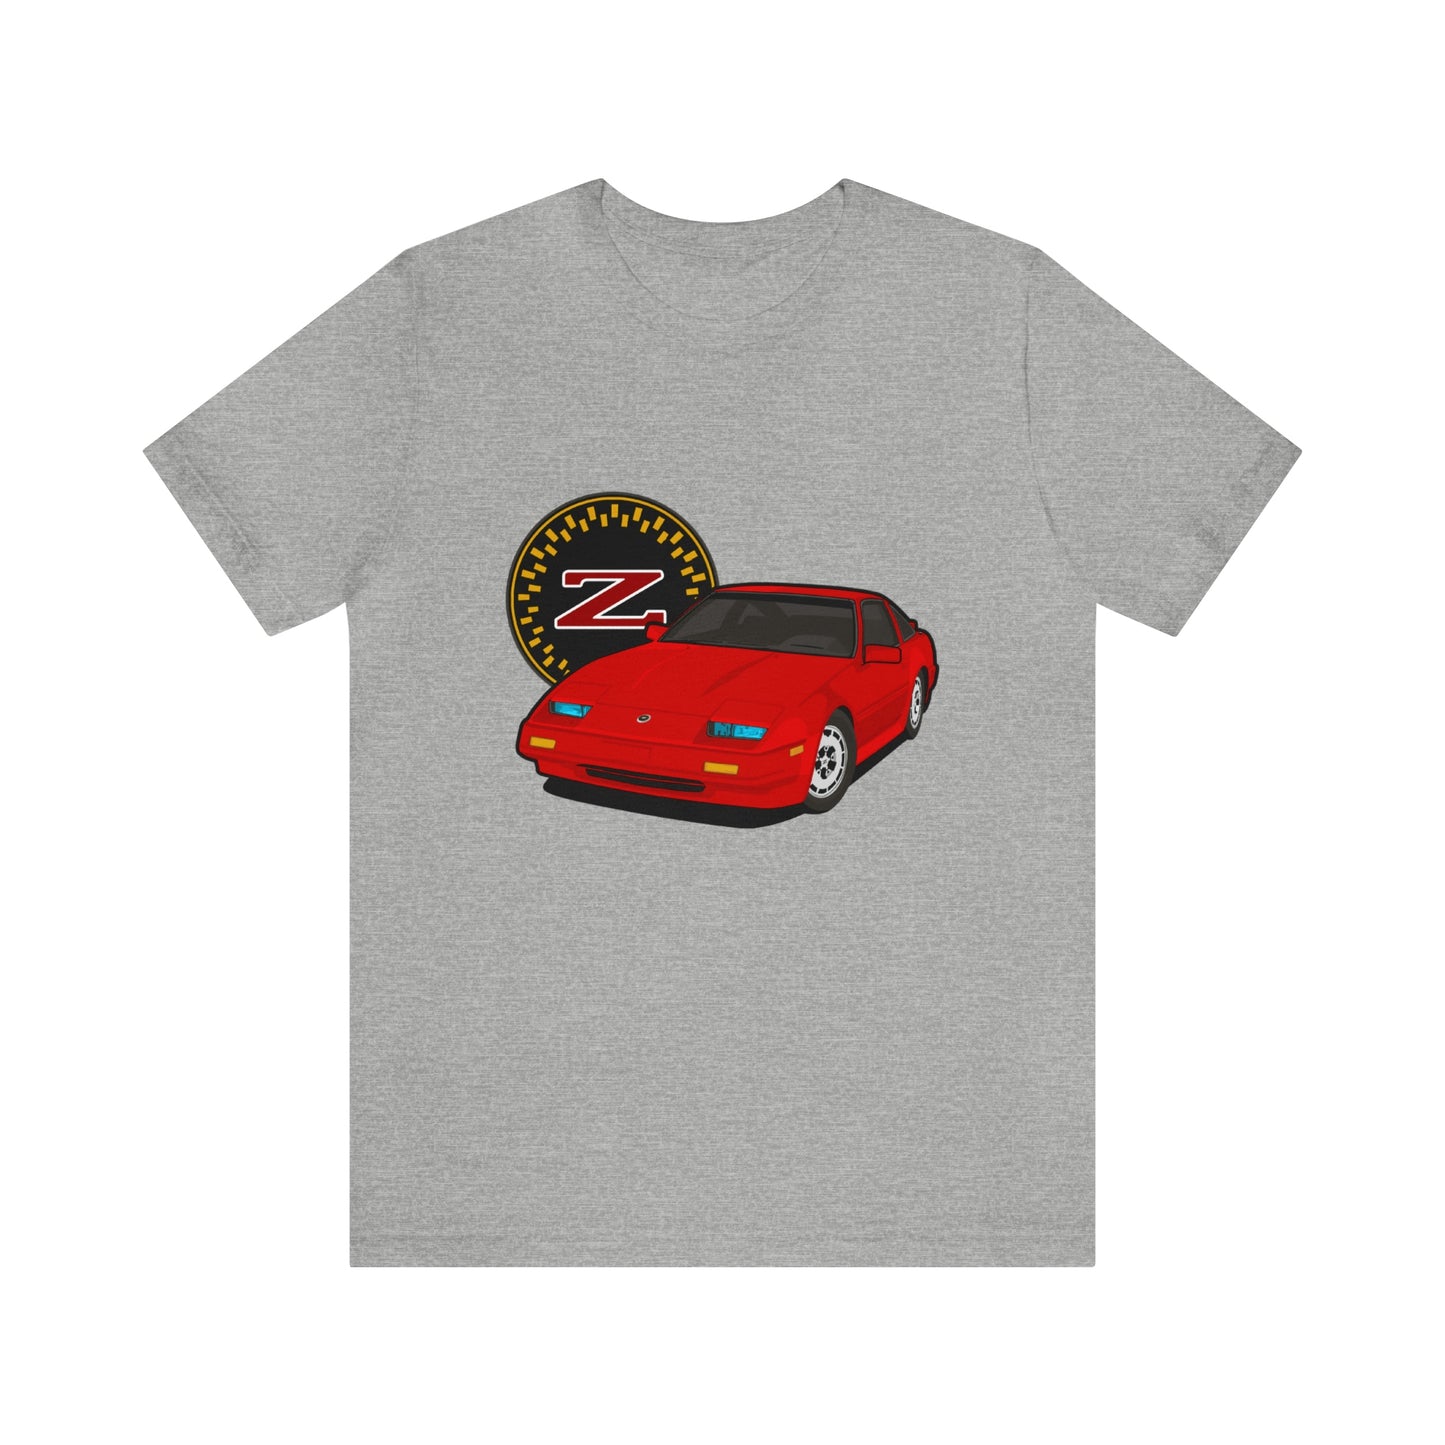 JDM Car Inspired T Shirt 47.